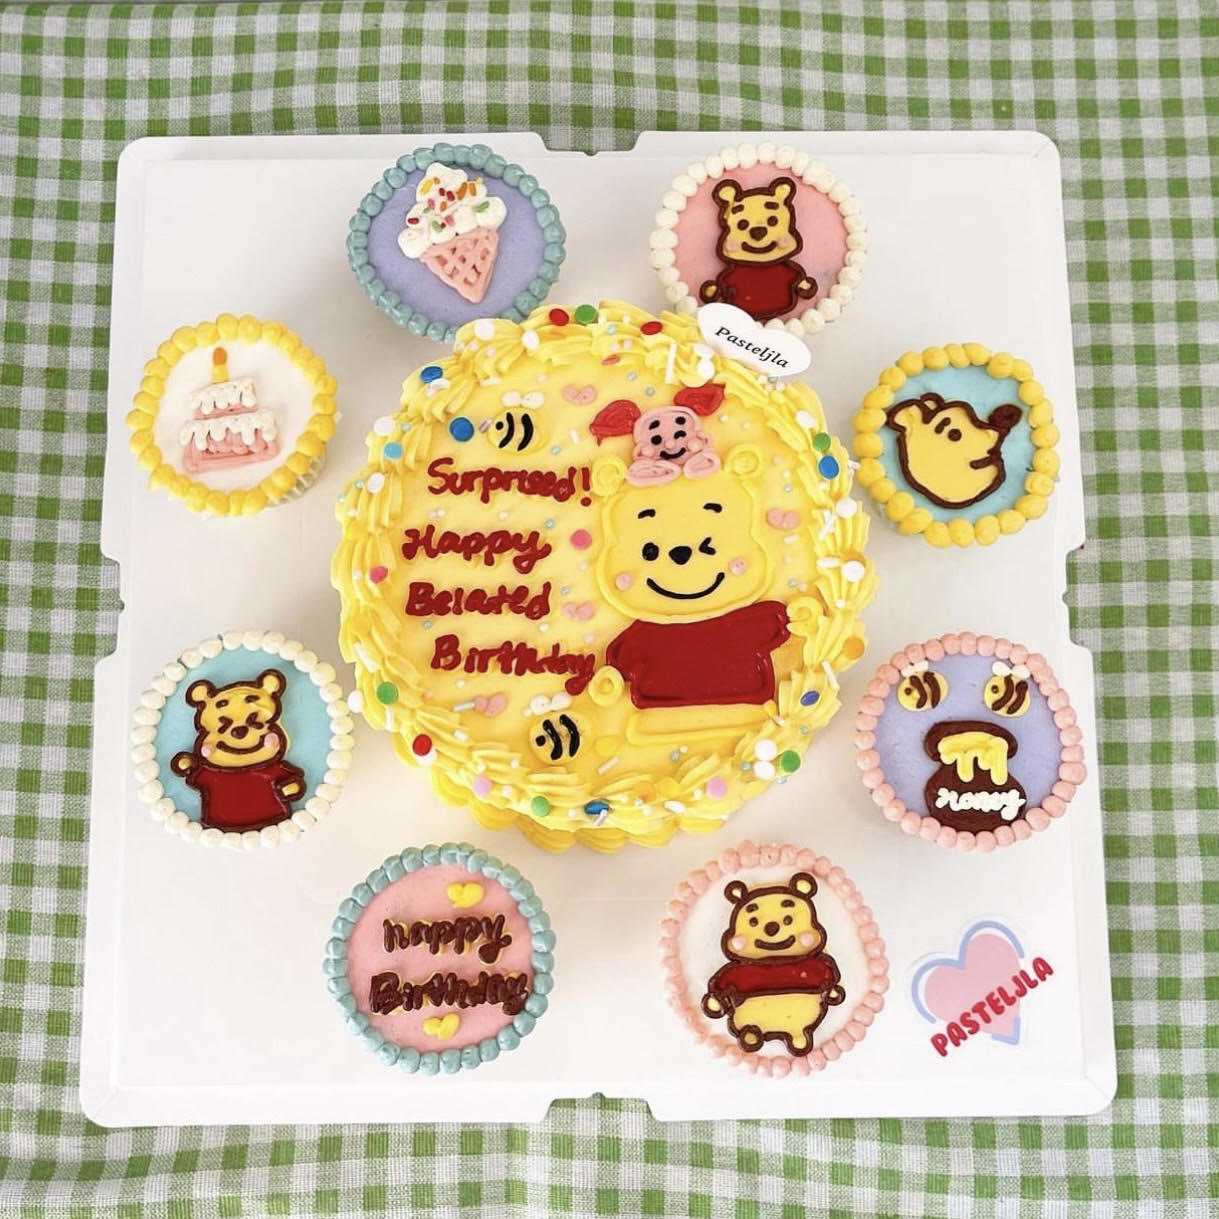 Winnie the Pooh cake + Cupcakes set